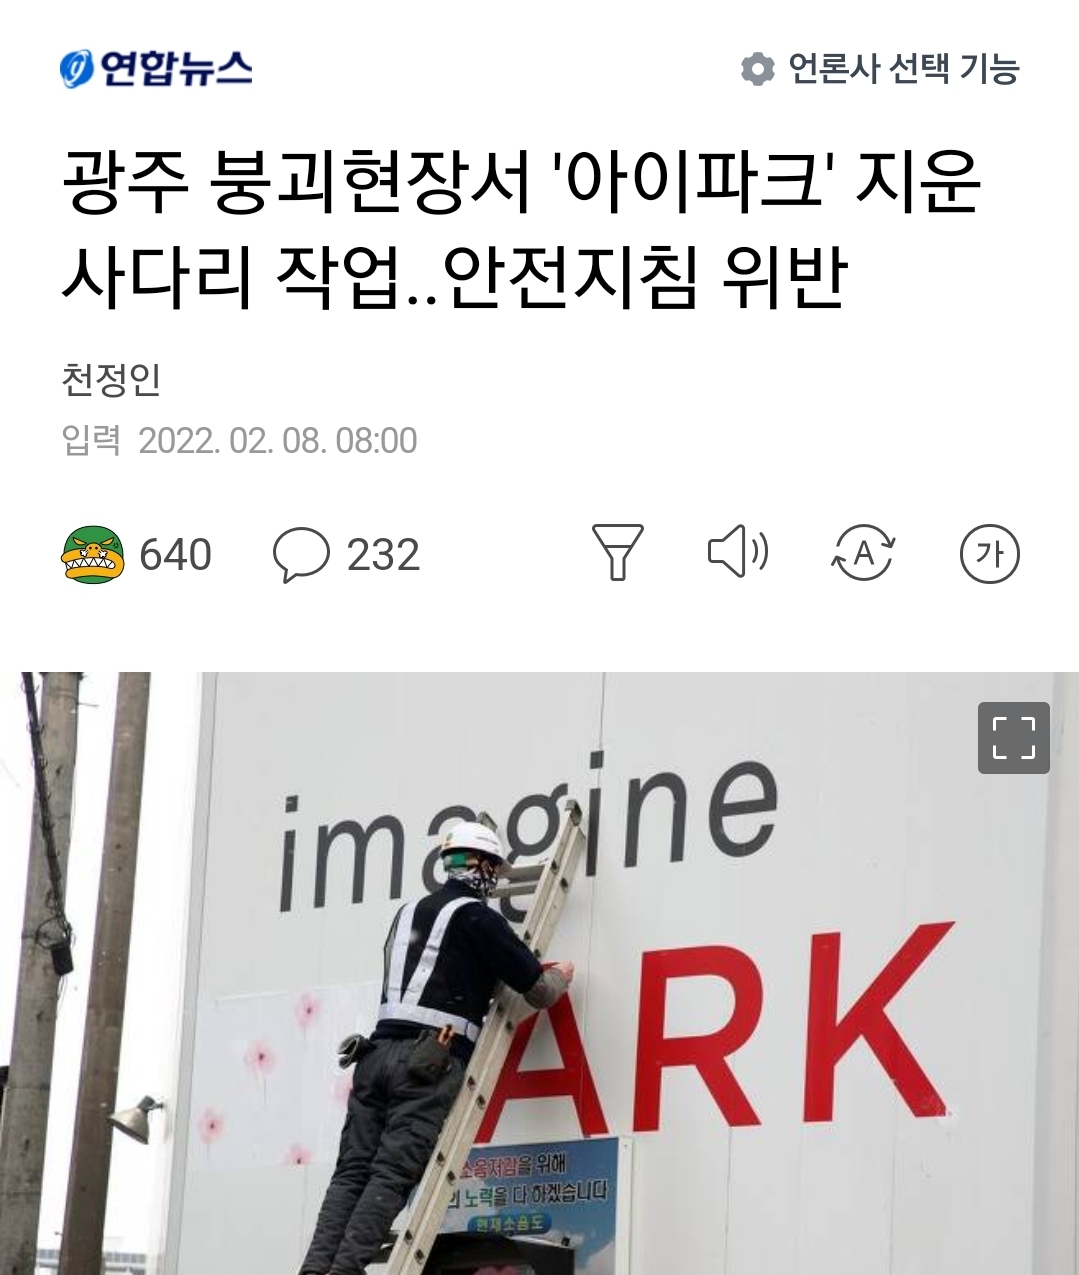 Updates on the collapse of Gwangju I-Park.